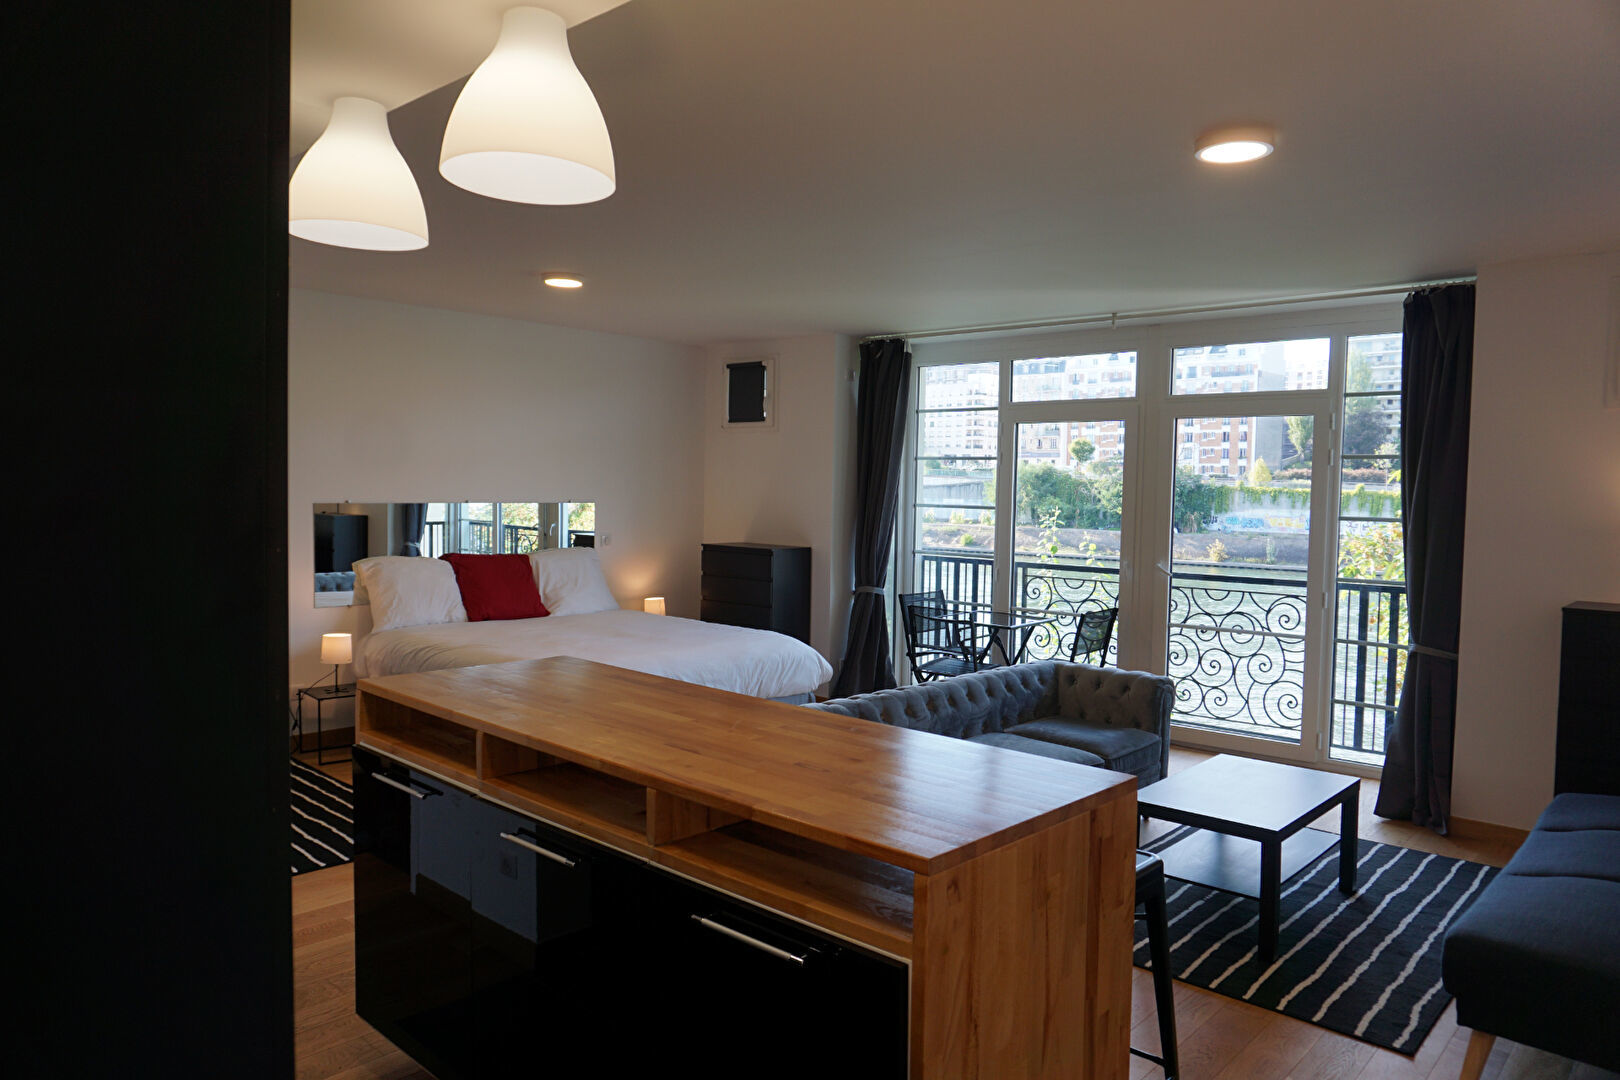 Appartement a louer neuilly-sur-seine - 1 pièce(s) - 51.38 m2 - Surfyn